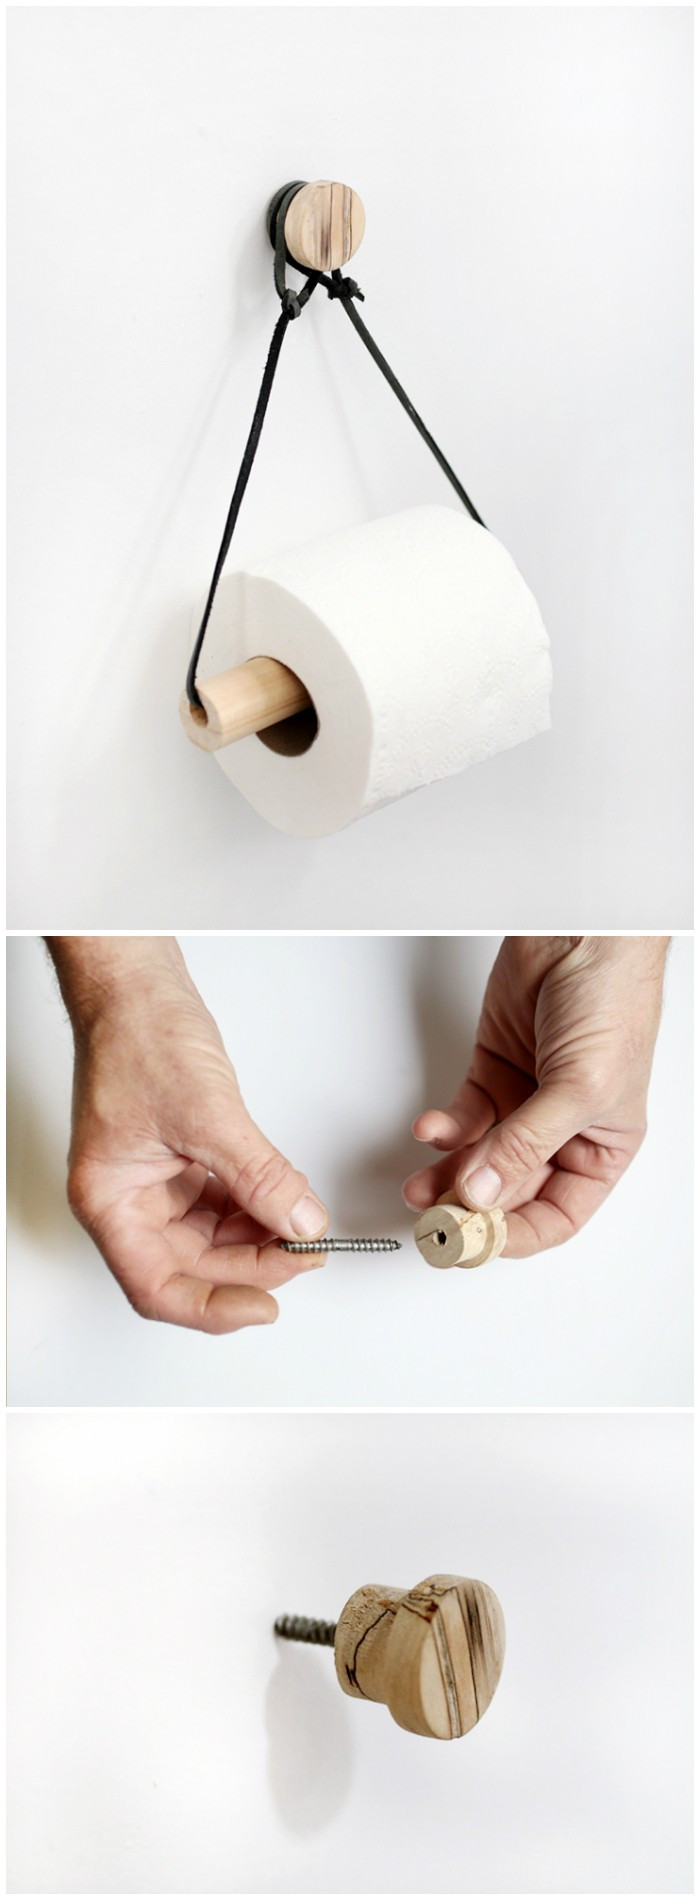 Best ideas about DIY Toilet Paper Storage
. Save or Pin DIY Toilet Paper Holder Ideas Add Decor To Bathroom Now.